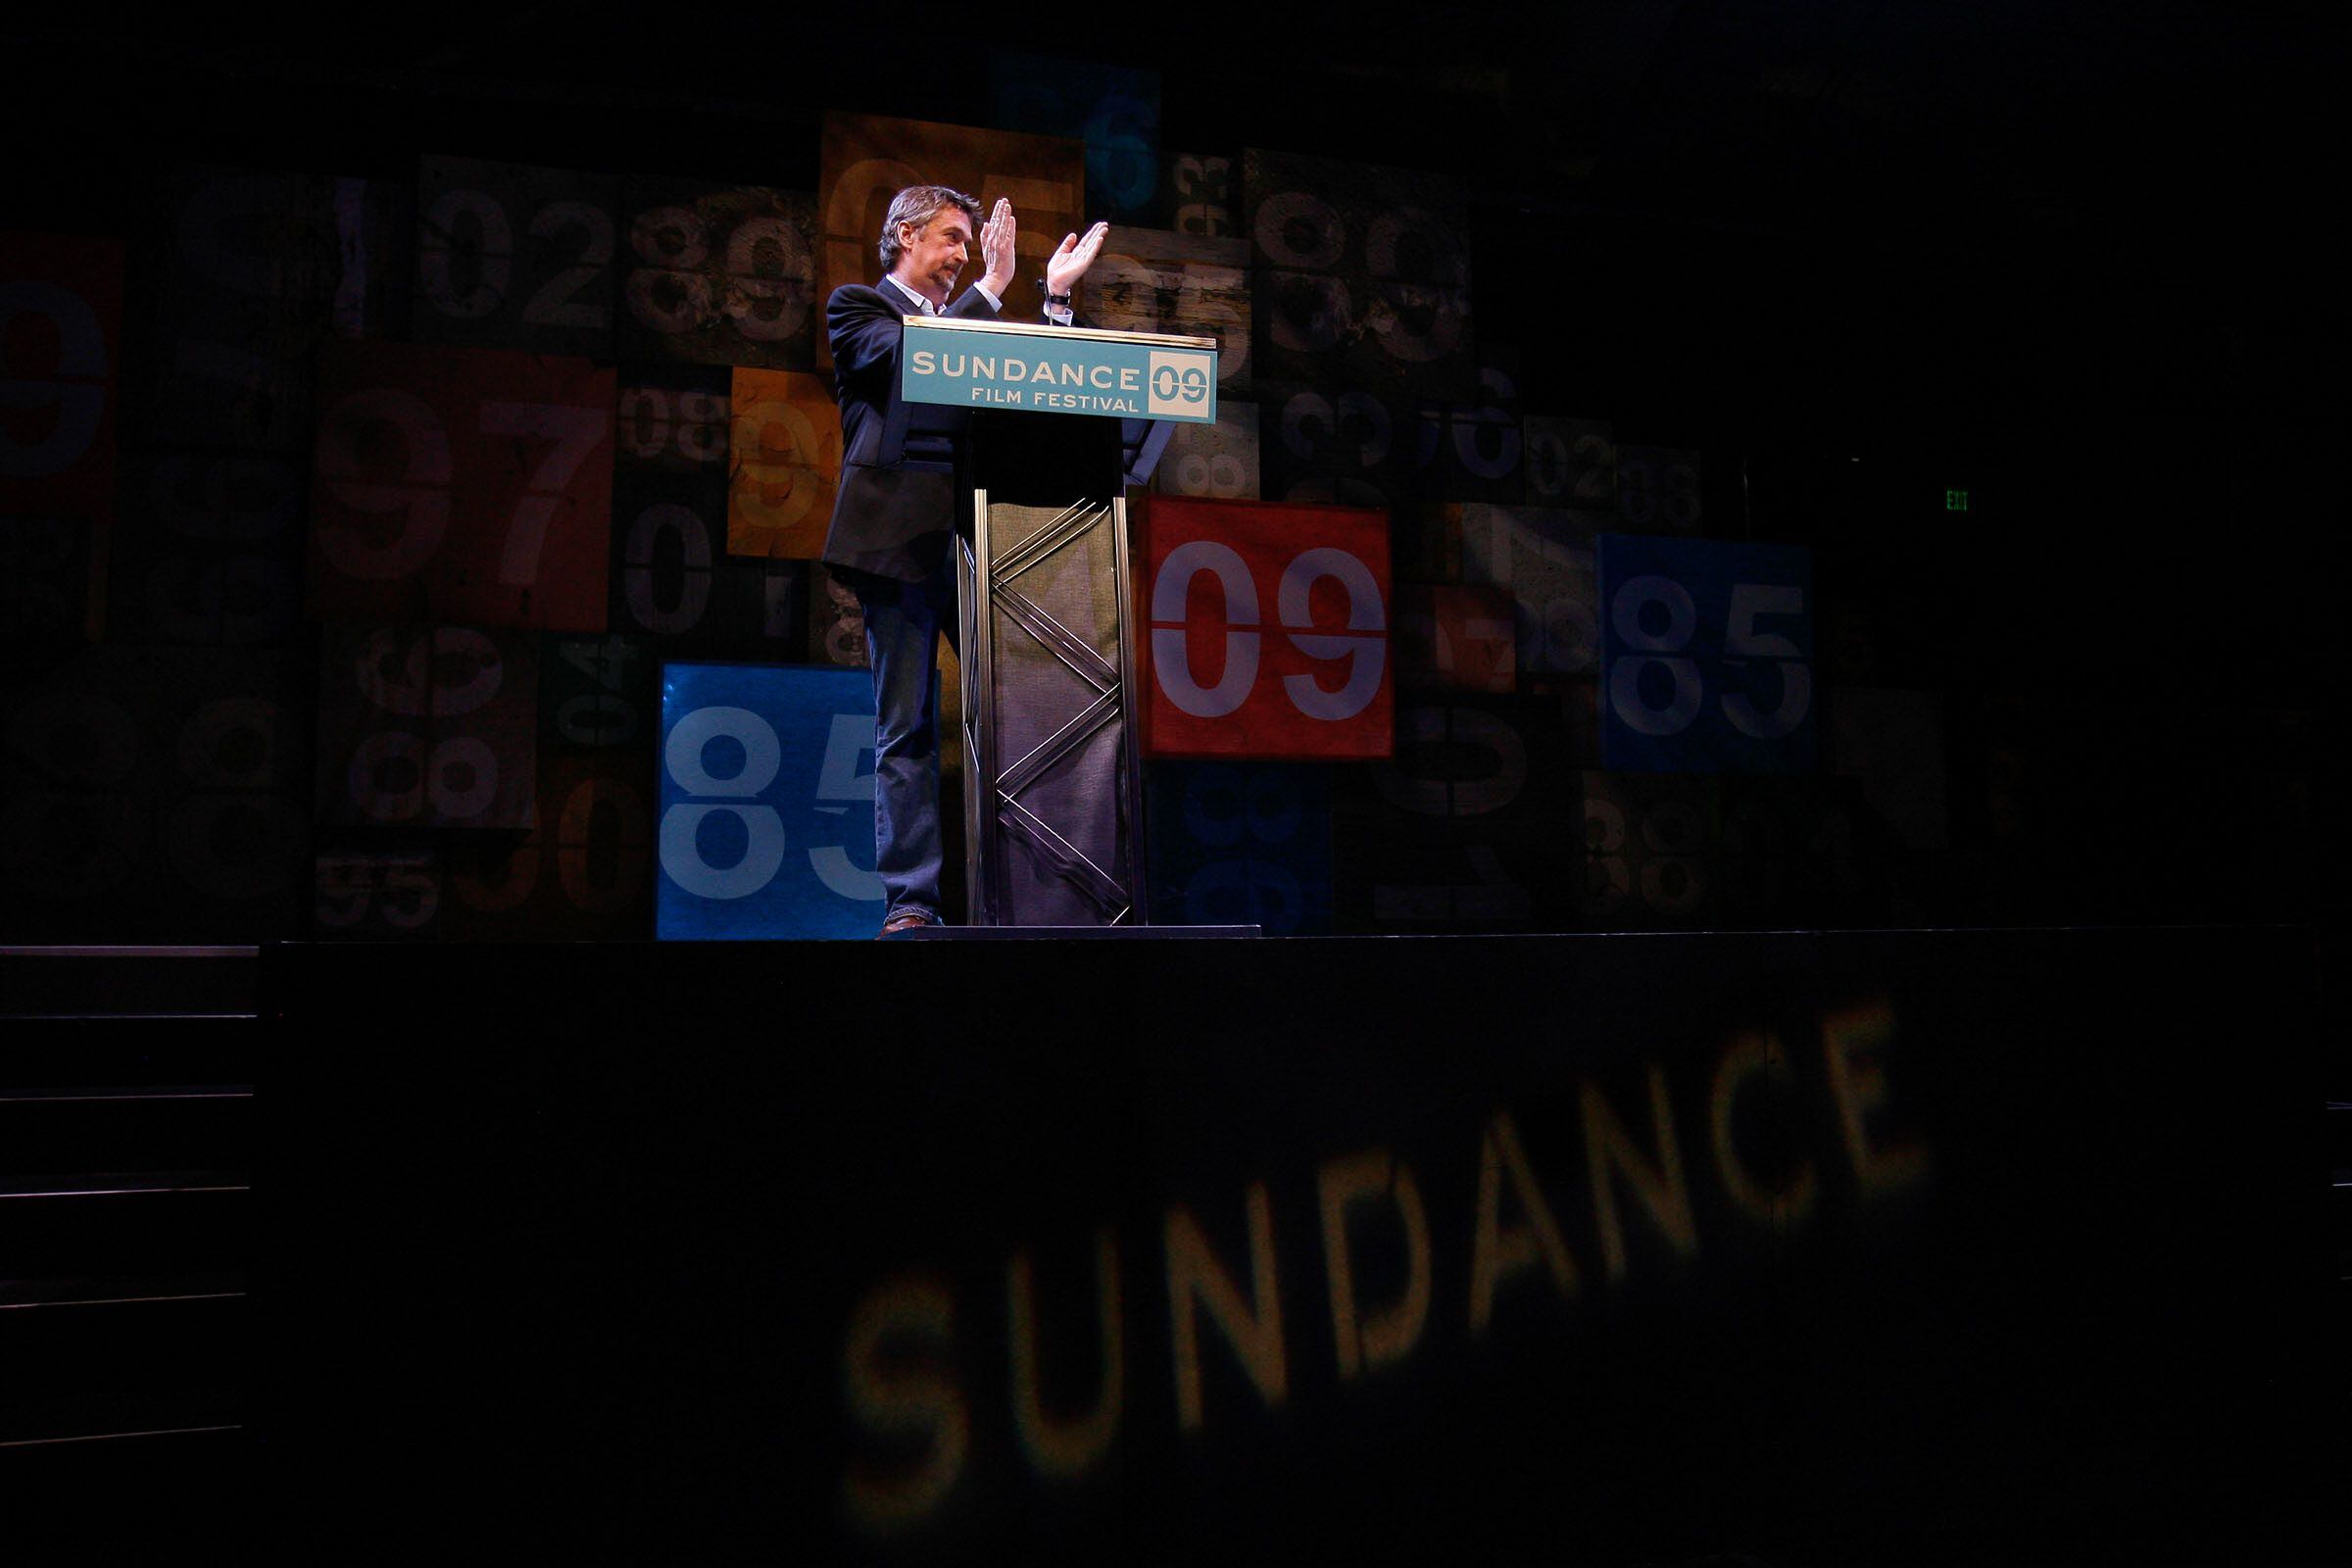 (Chris Detrick | The Salt Lake Tribune) Sundance director Geoffrey Gilmore speaks during the 2009 Sundance Film Festival Awards Ceremony at the Park City Raquet Club Saturday, January 24, 2009.